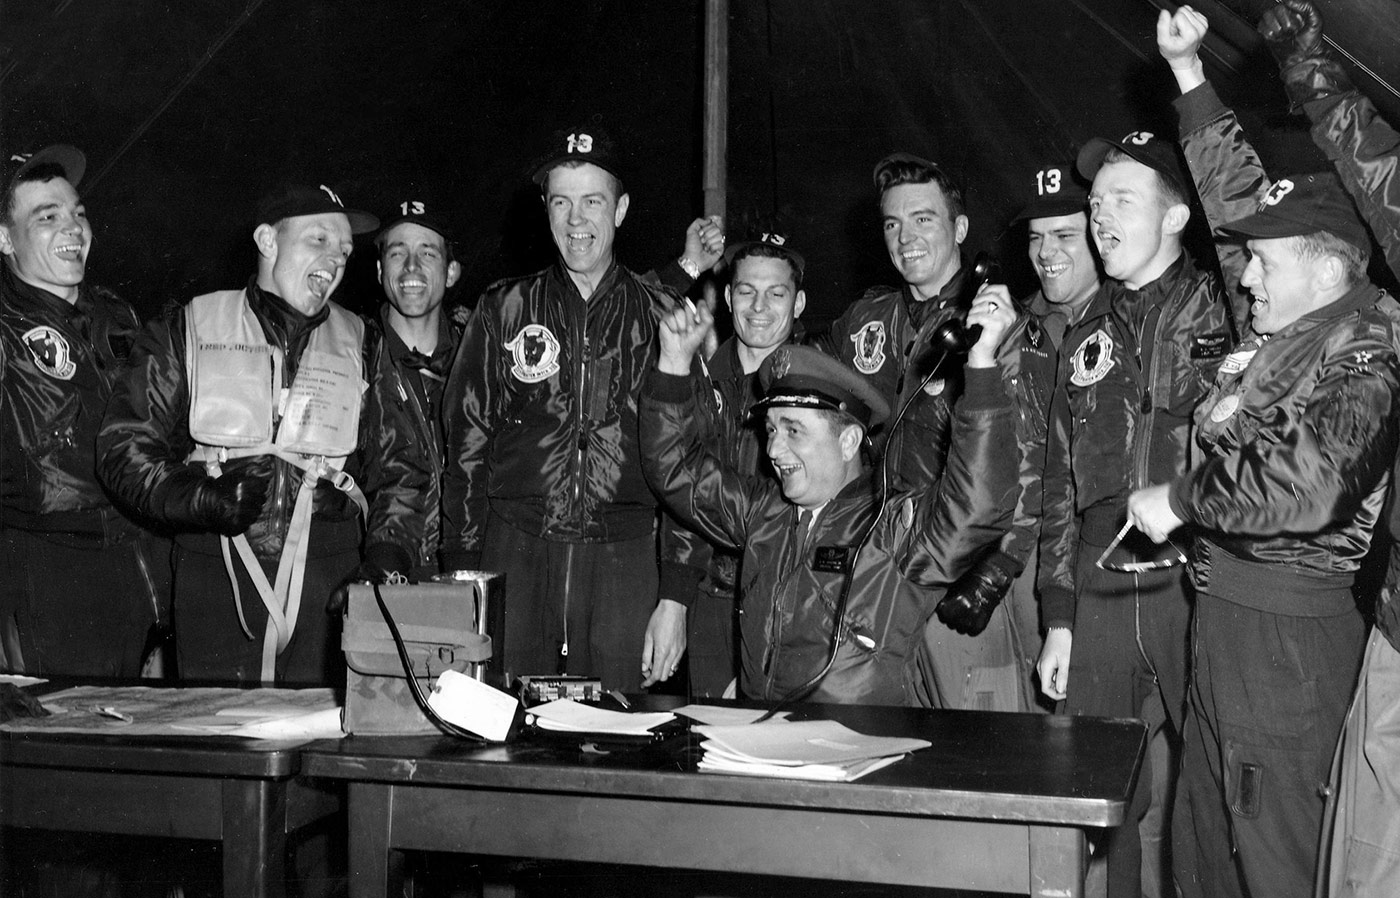                             Members of the USAF 4708th Defense Wing at Otis Air Force Base, 1954